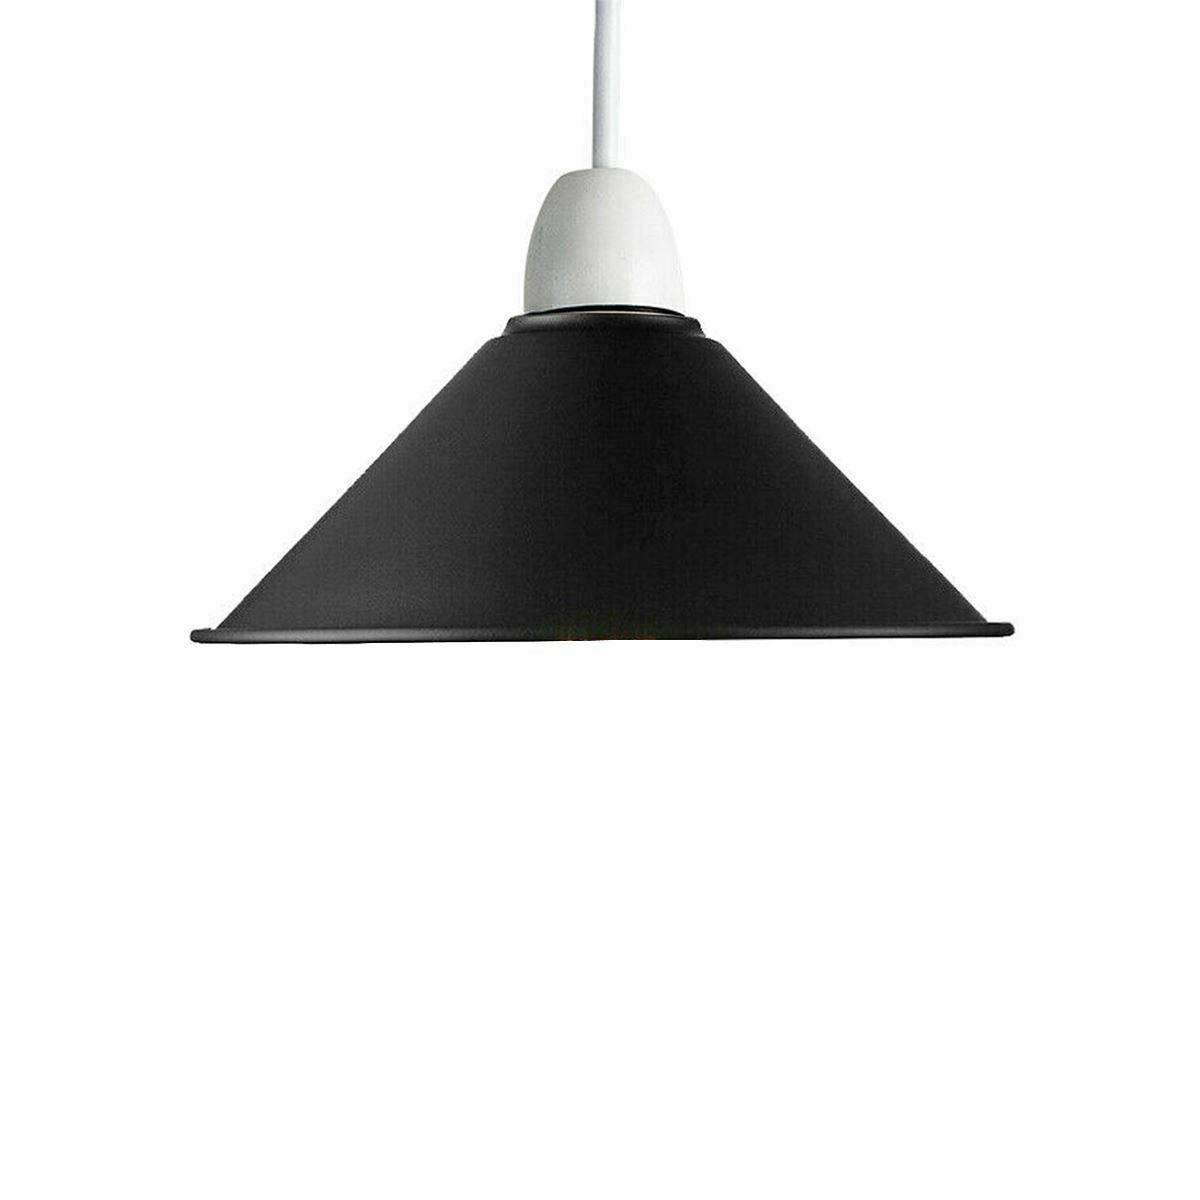 Black Cone Pendant Lamp Shade.JPG